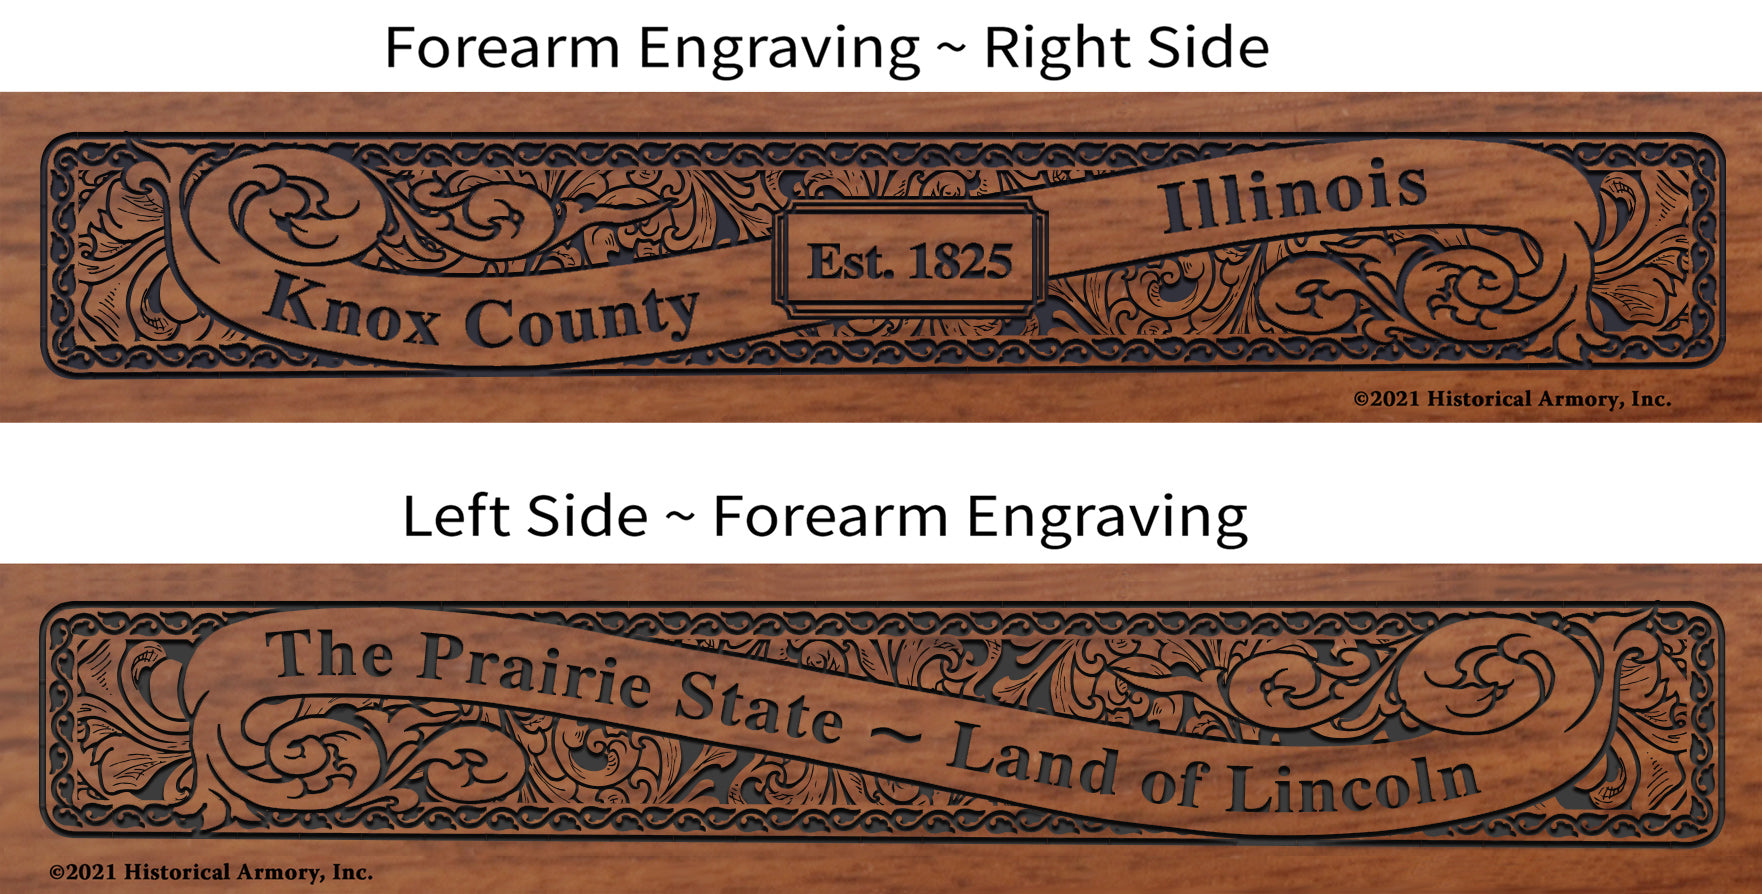 Knox County Illinois Establishment and Motto History Engraved Rifle Forearm